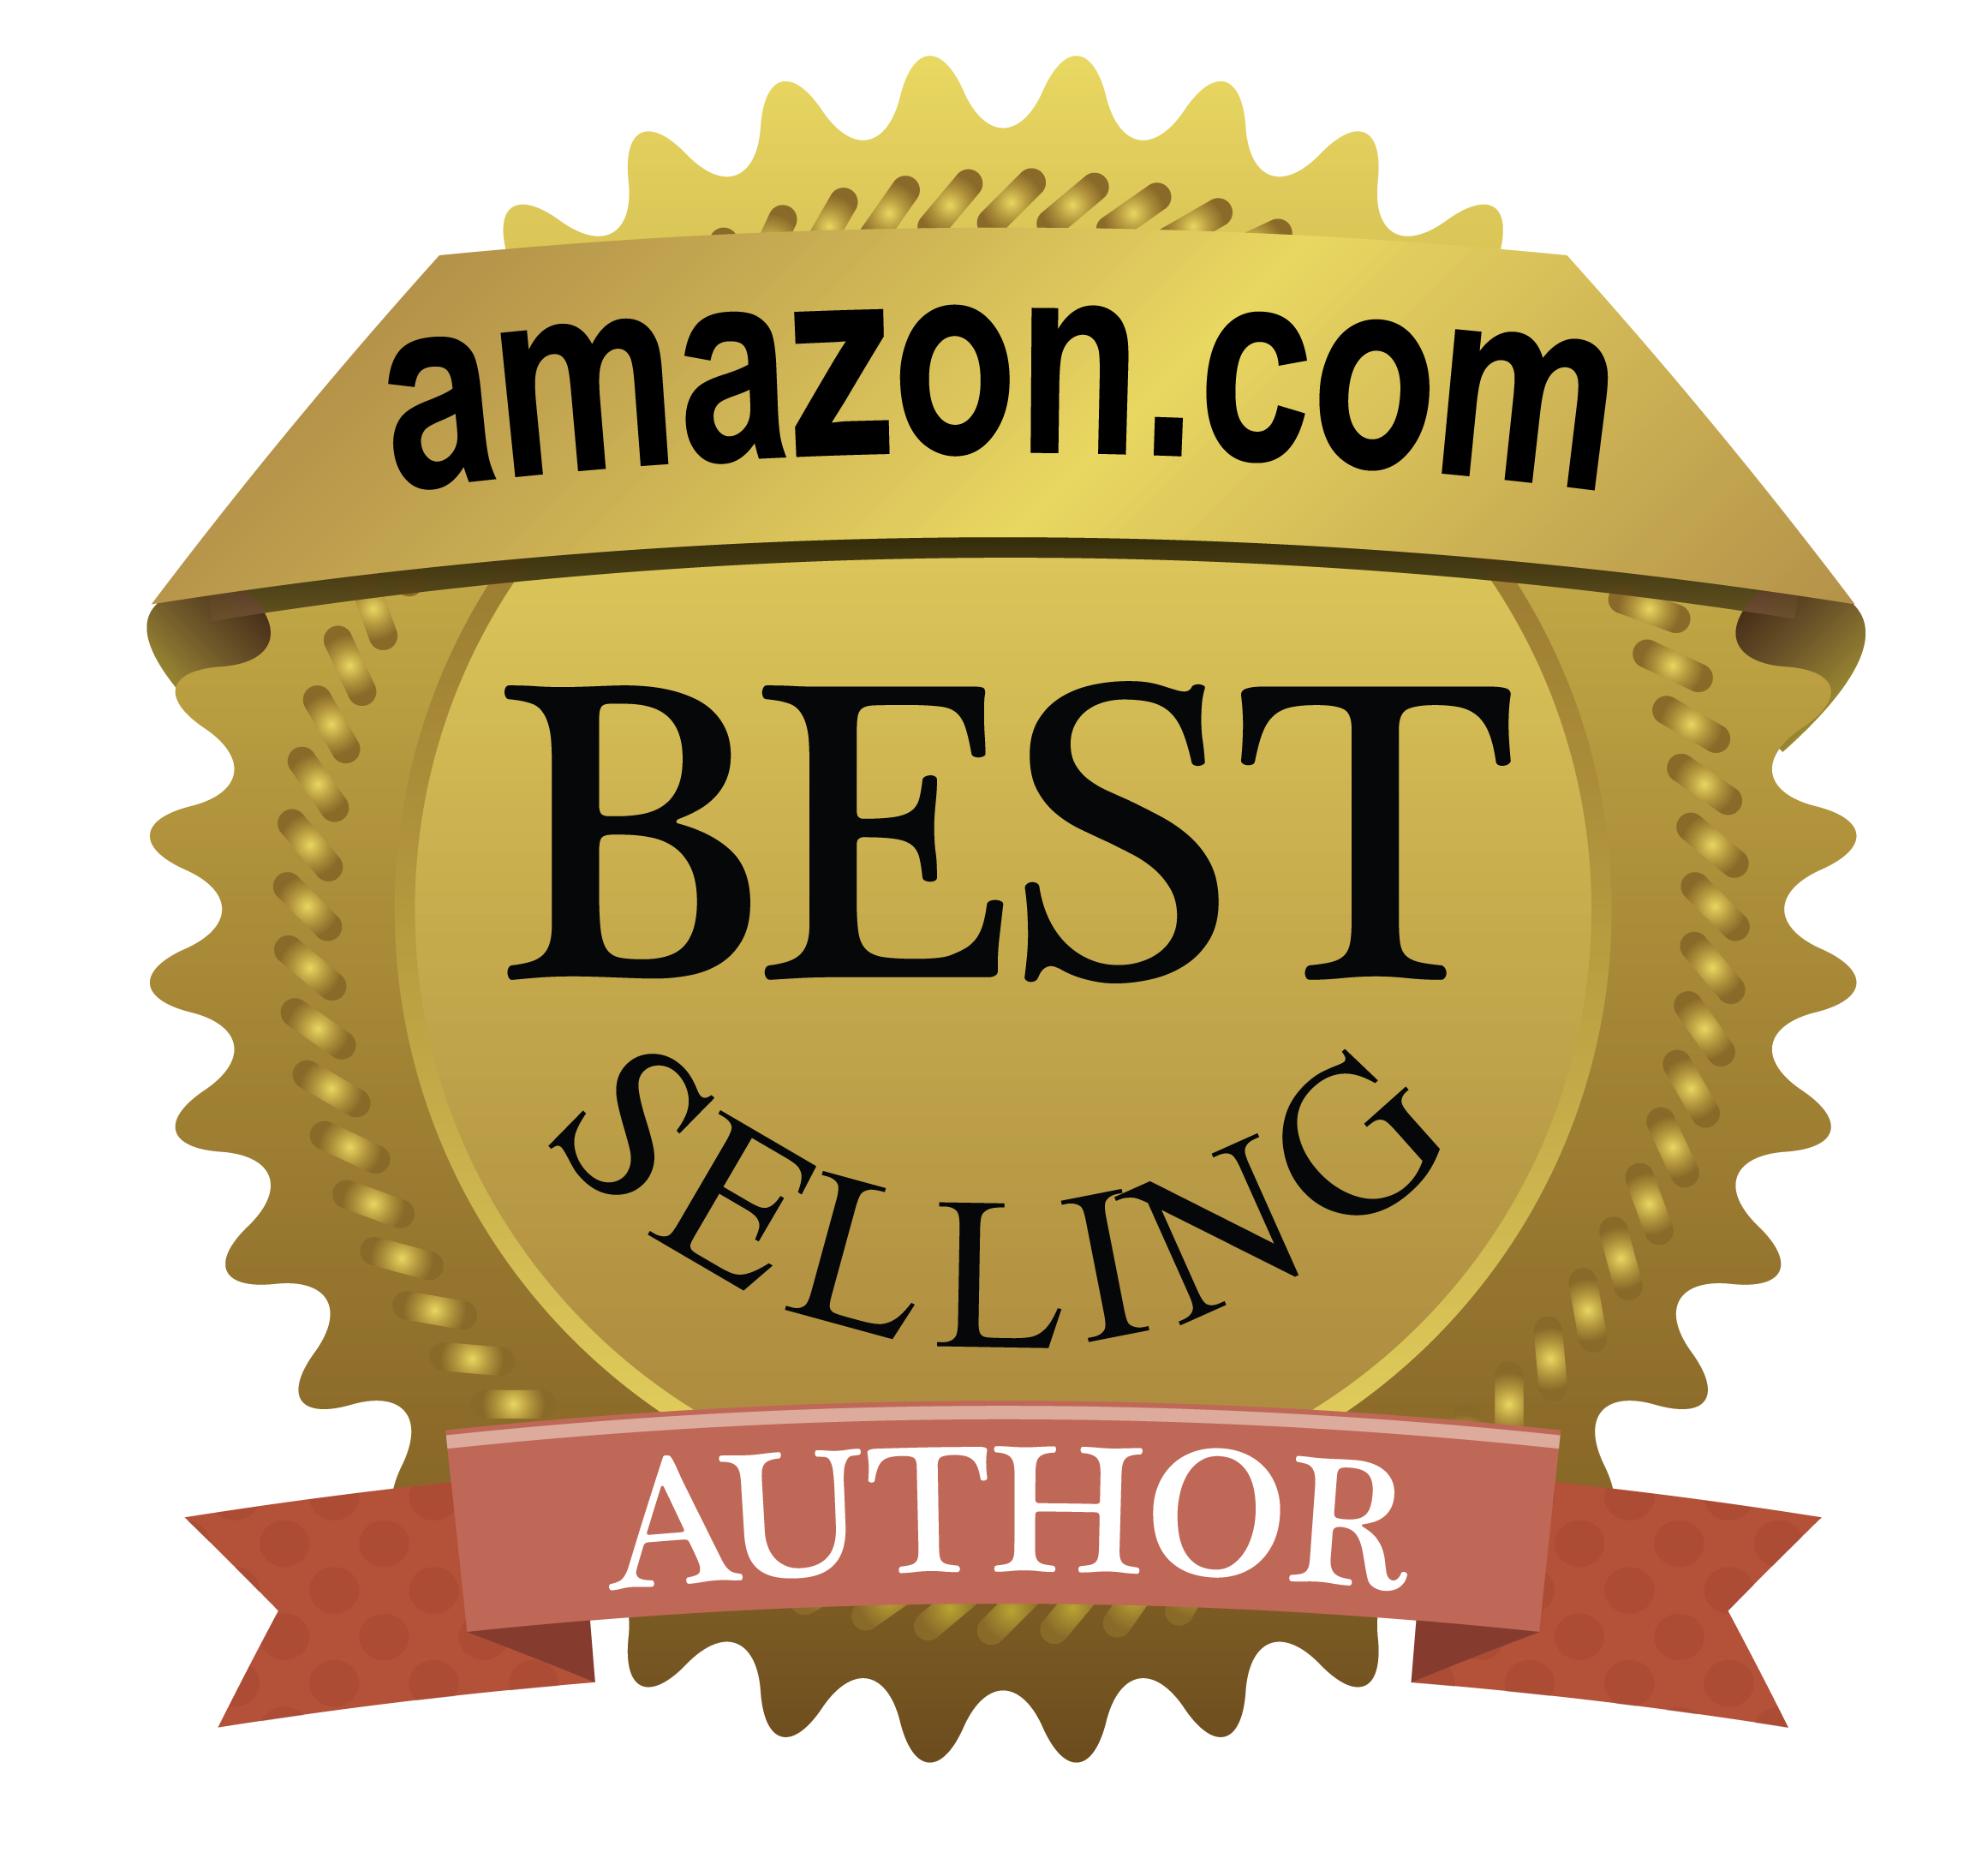 Amazon Best Selling Author Gold Badge